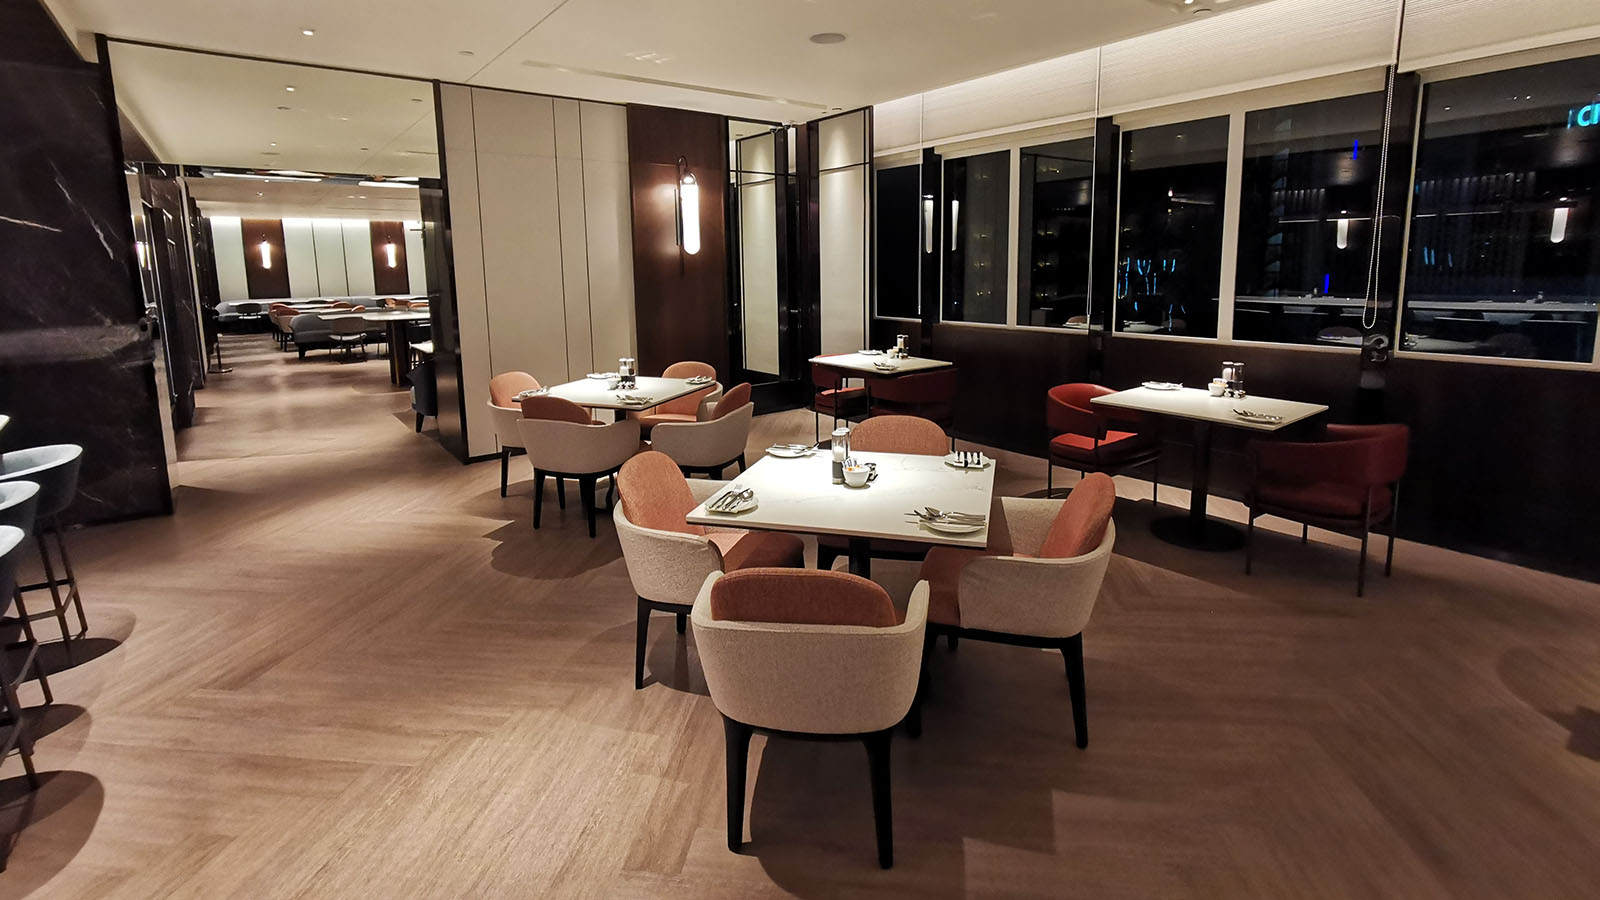 Executive Lounge seating at Hilton Singapore Orchard hotel